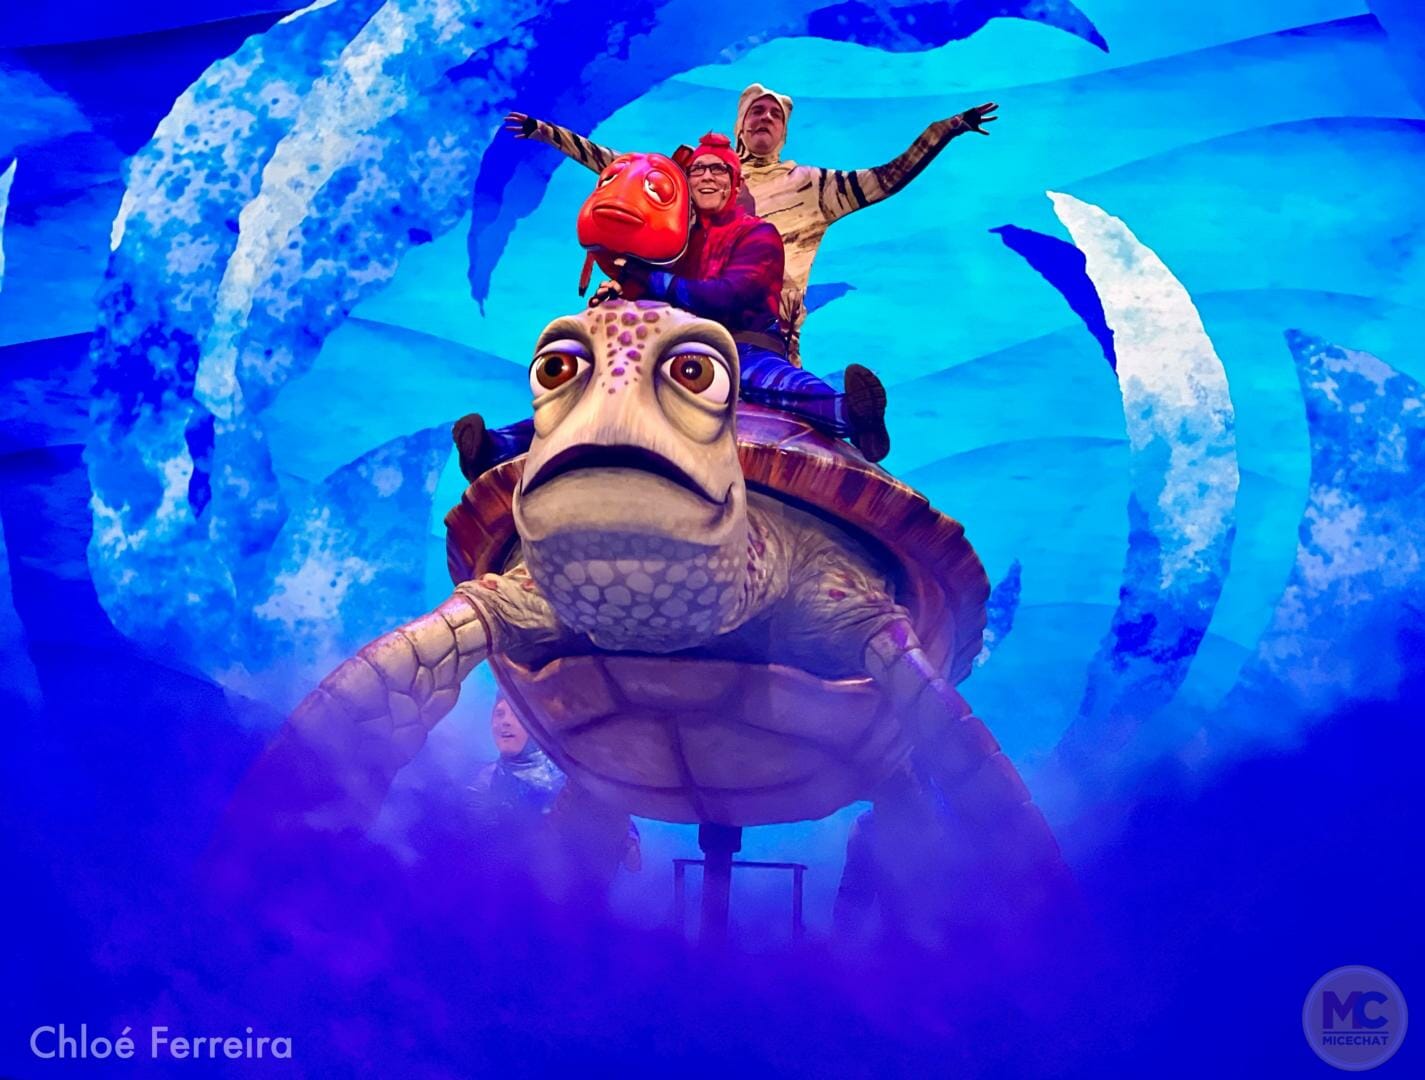 Finding Nemo Returns to Disney's Animal Kingdom in The Big Blue